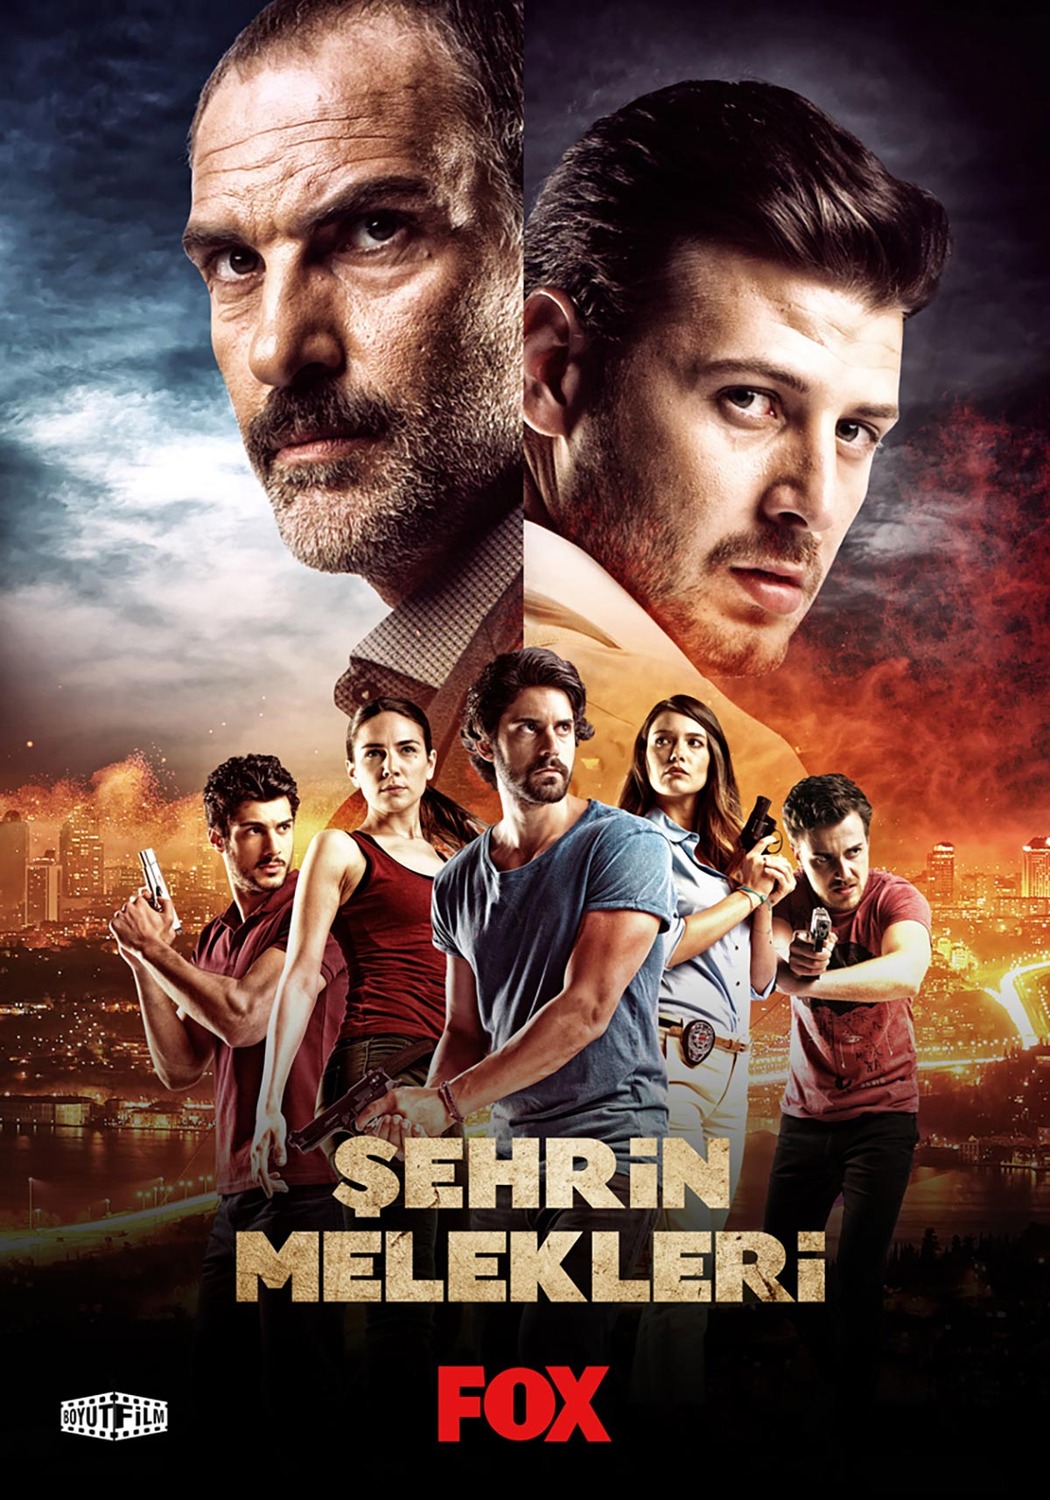 Extra Large TV Poster Image for Sehrin Melekleri (#1 of 3)